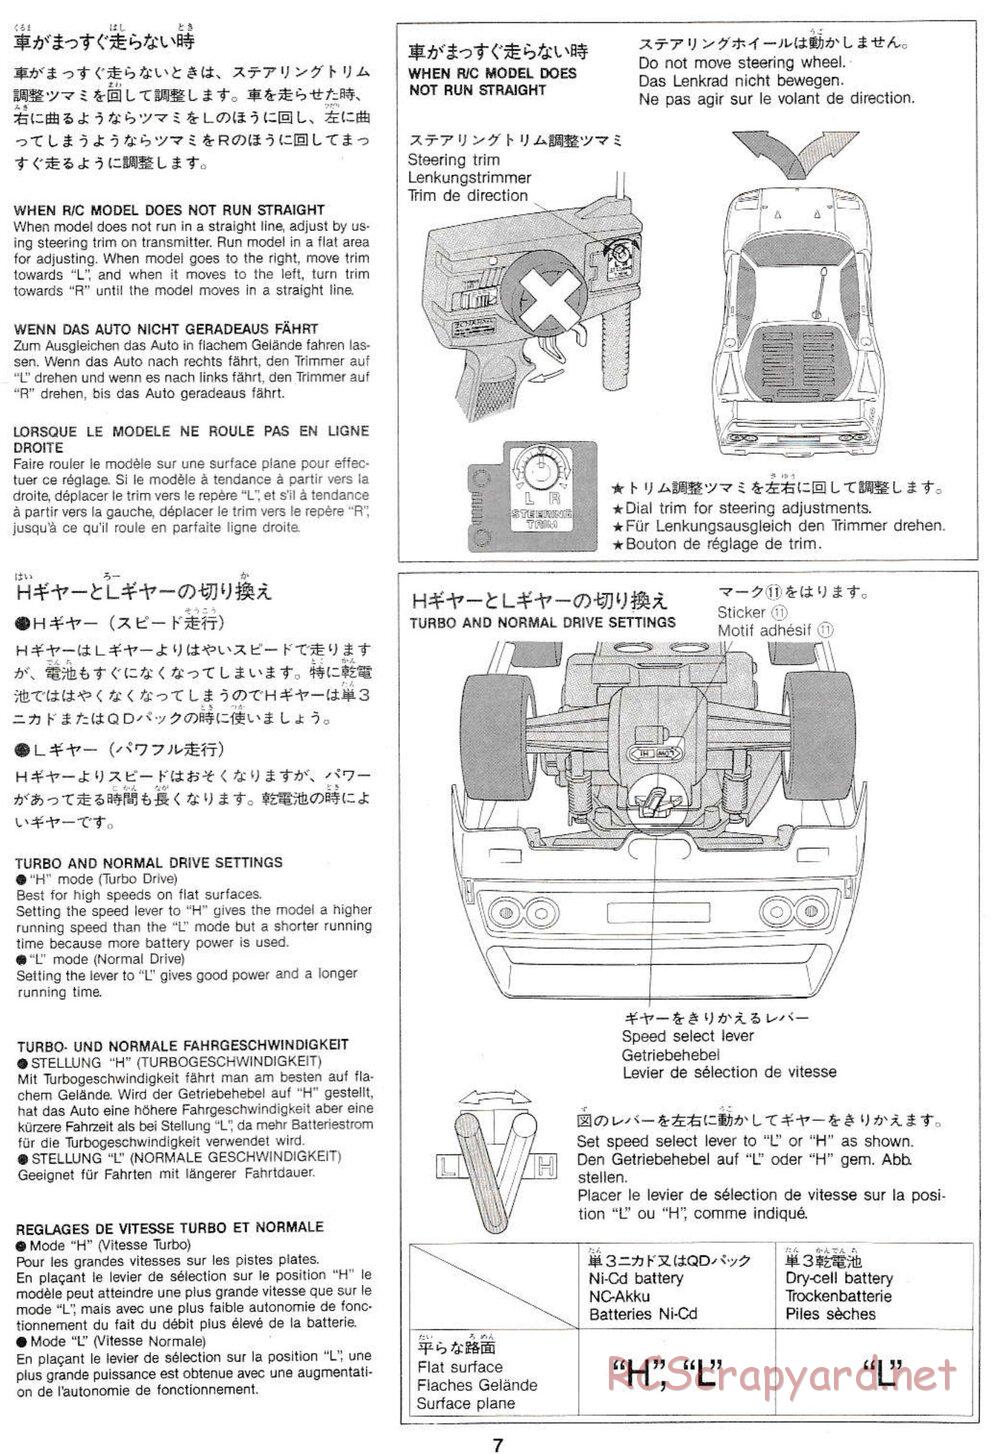 Tamiya - Ferrari F40 QD Chassis - Manual - Page 7